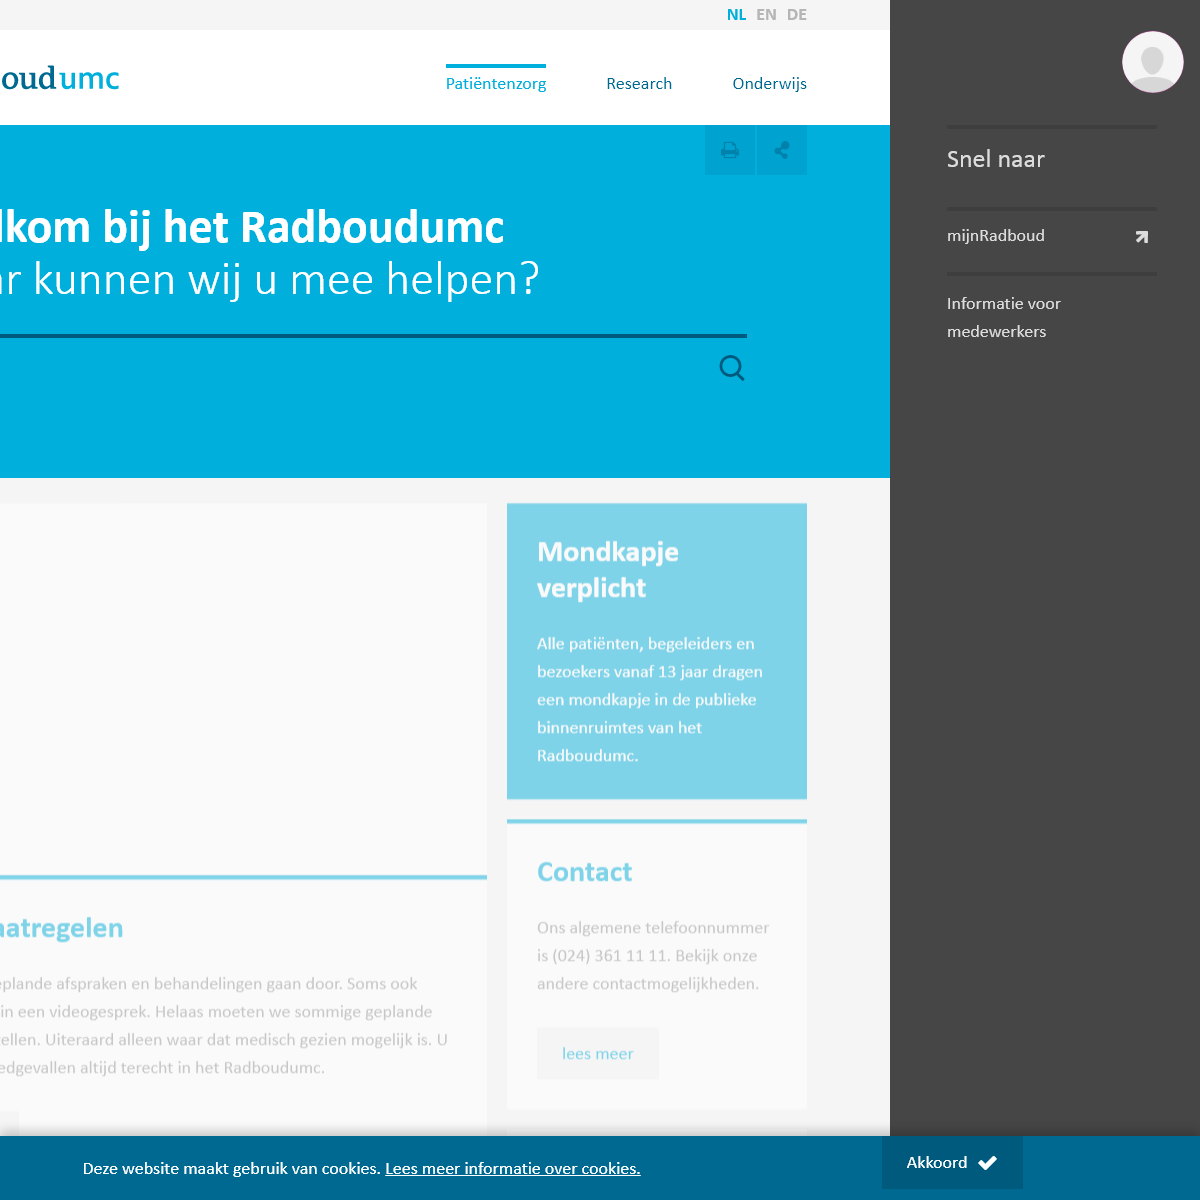 A complete backup of radboudumc.nl